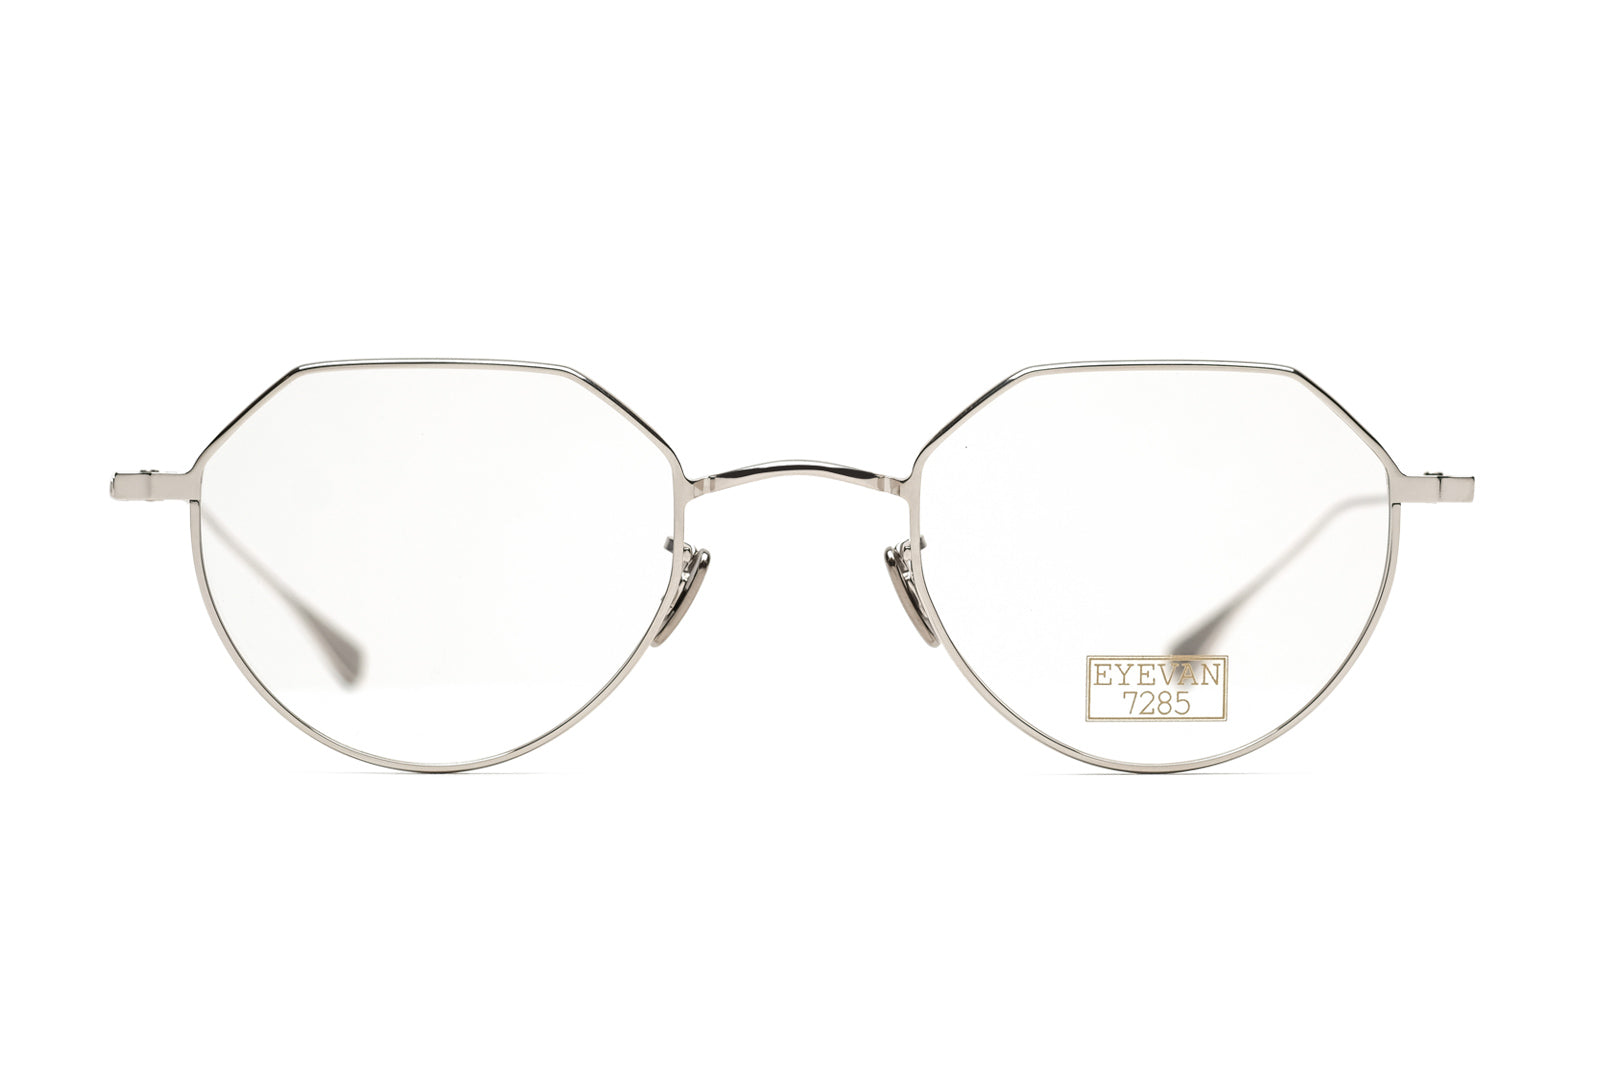 Eyevan 7285 | 177 Eyeglasses